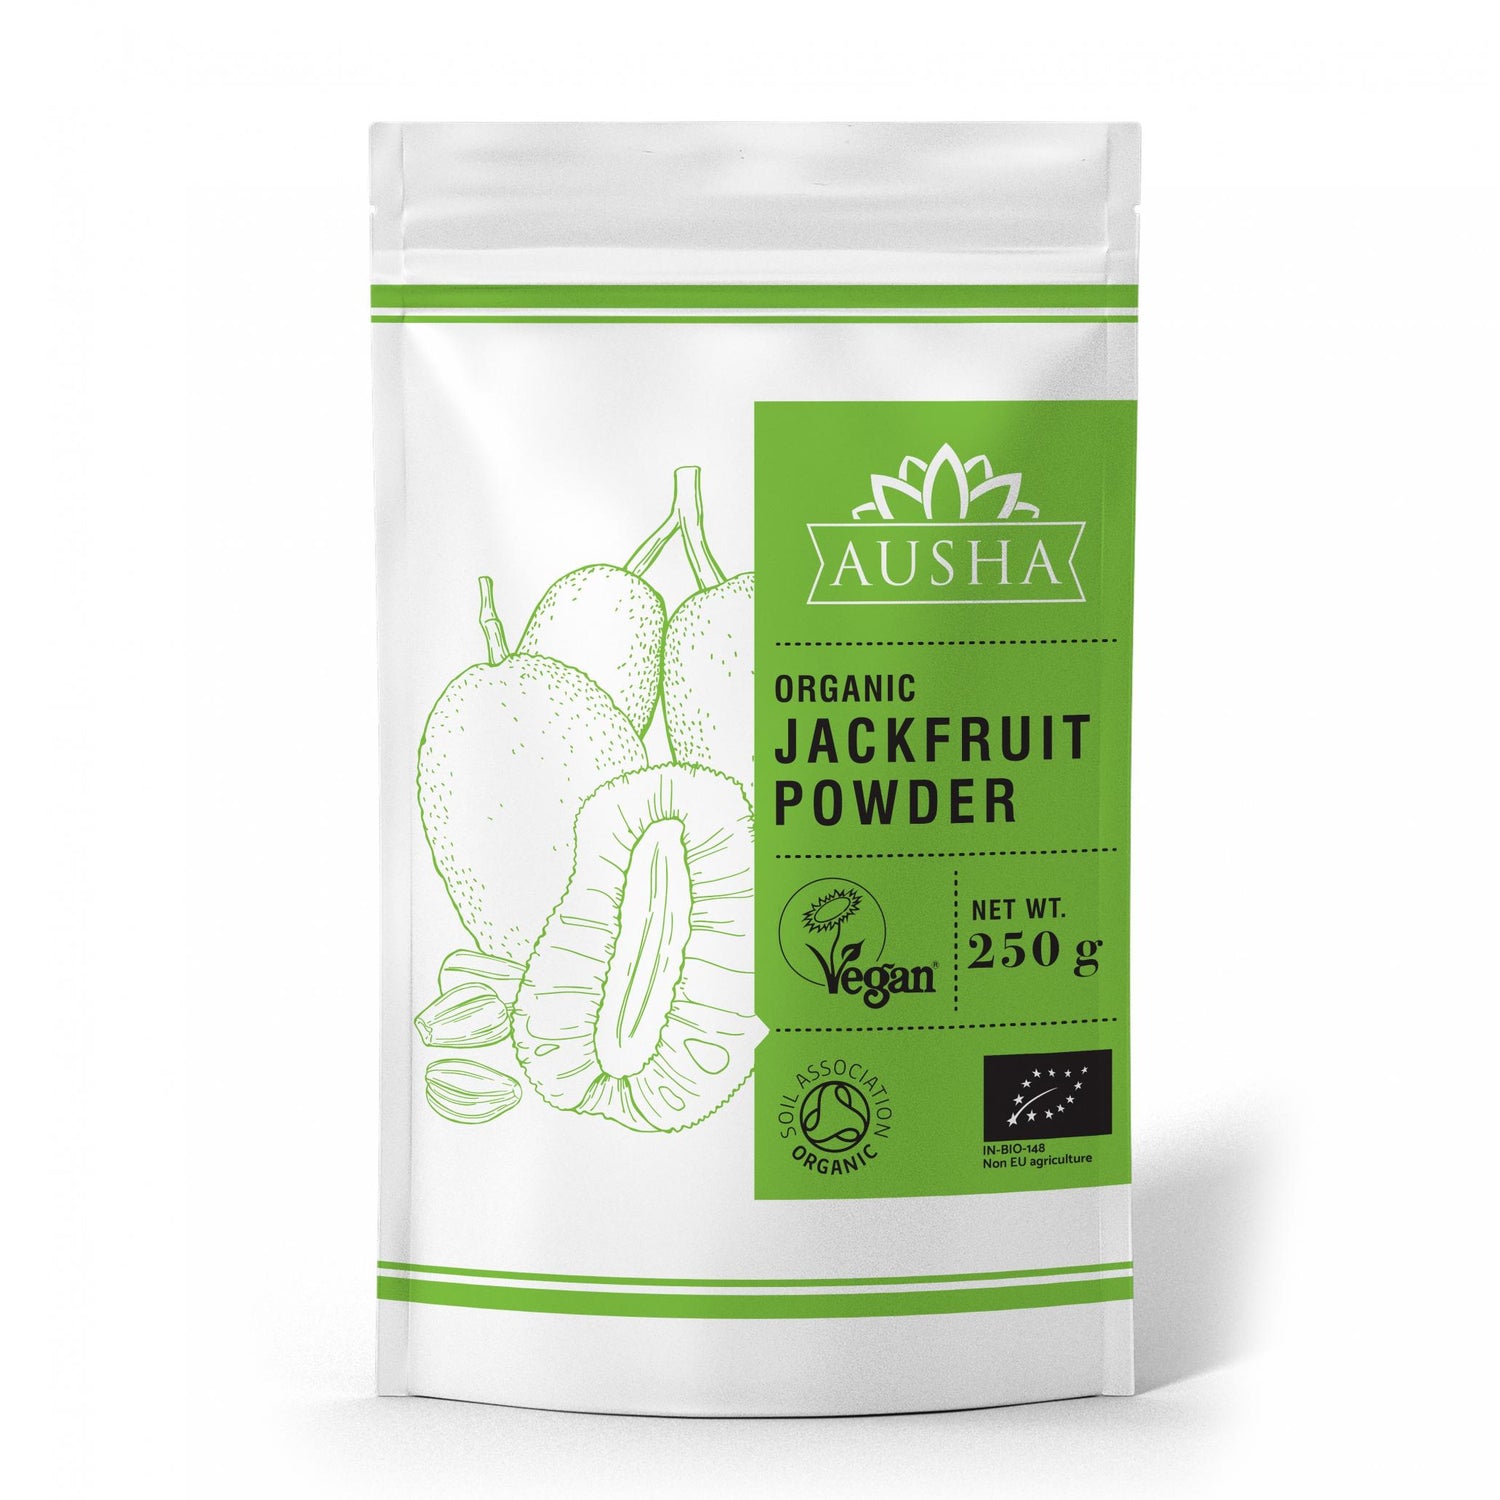 Ausha Organic Jackfruit Powder 250g